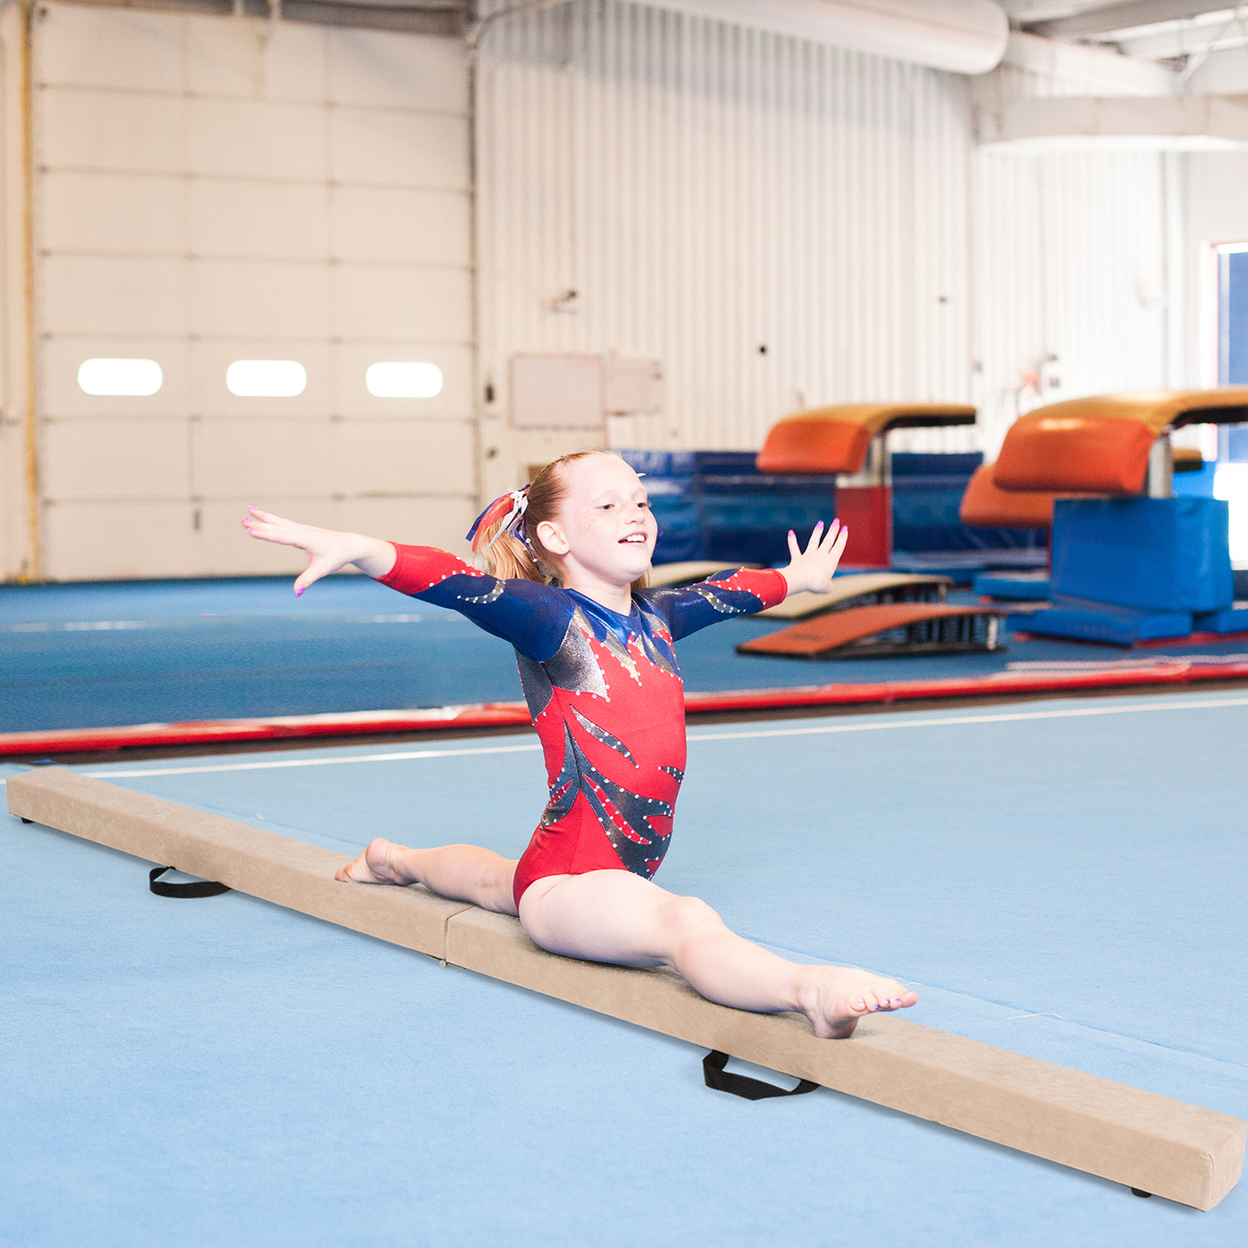 7FT Folding Gymnastic Beam Portable Floor Balance Beam W/Handles For Gymnasts - Brown